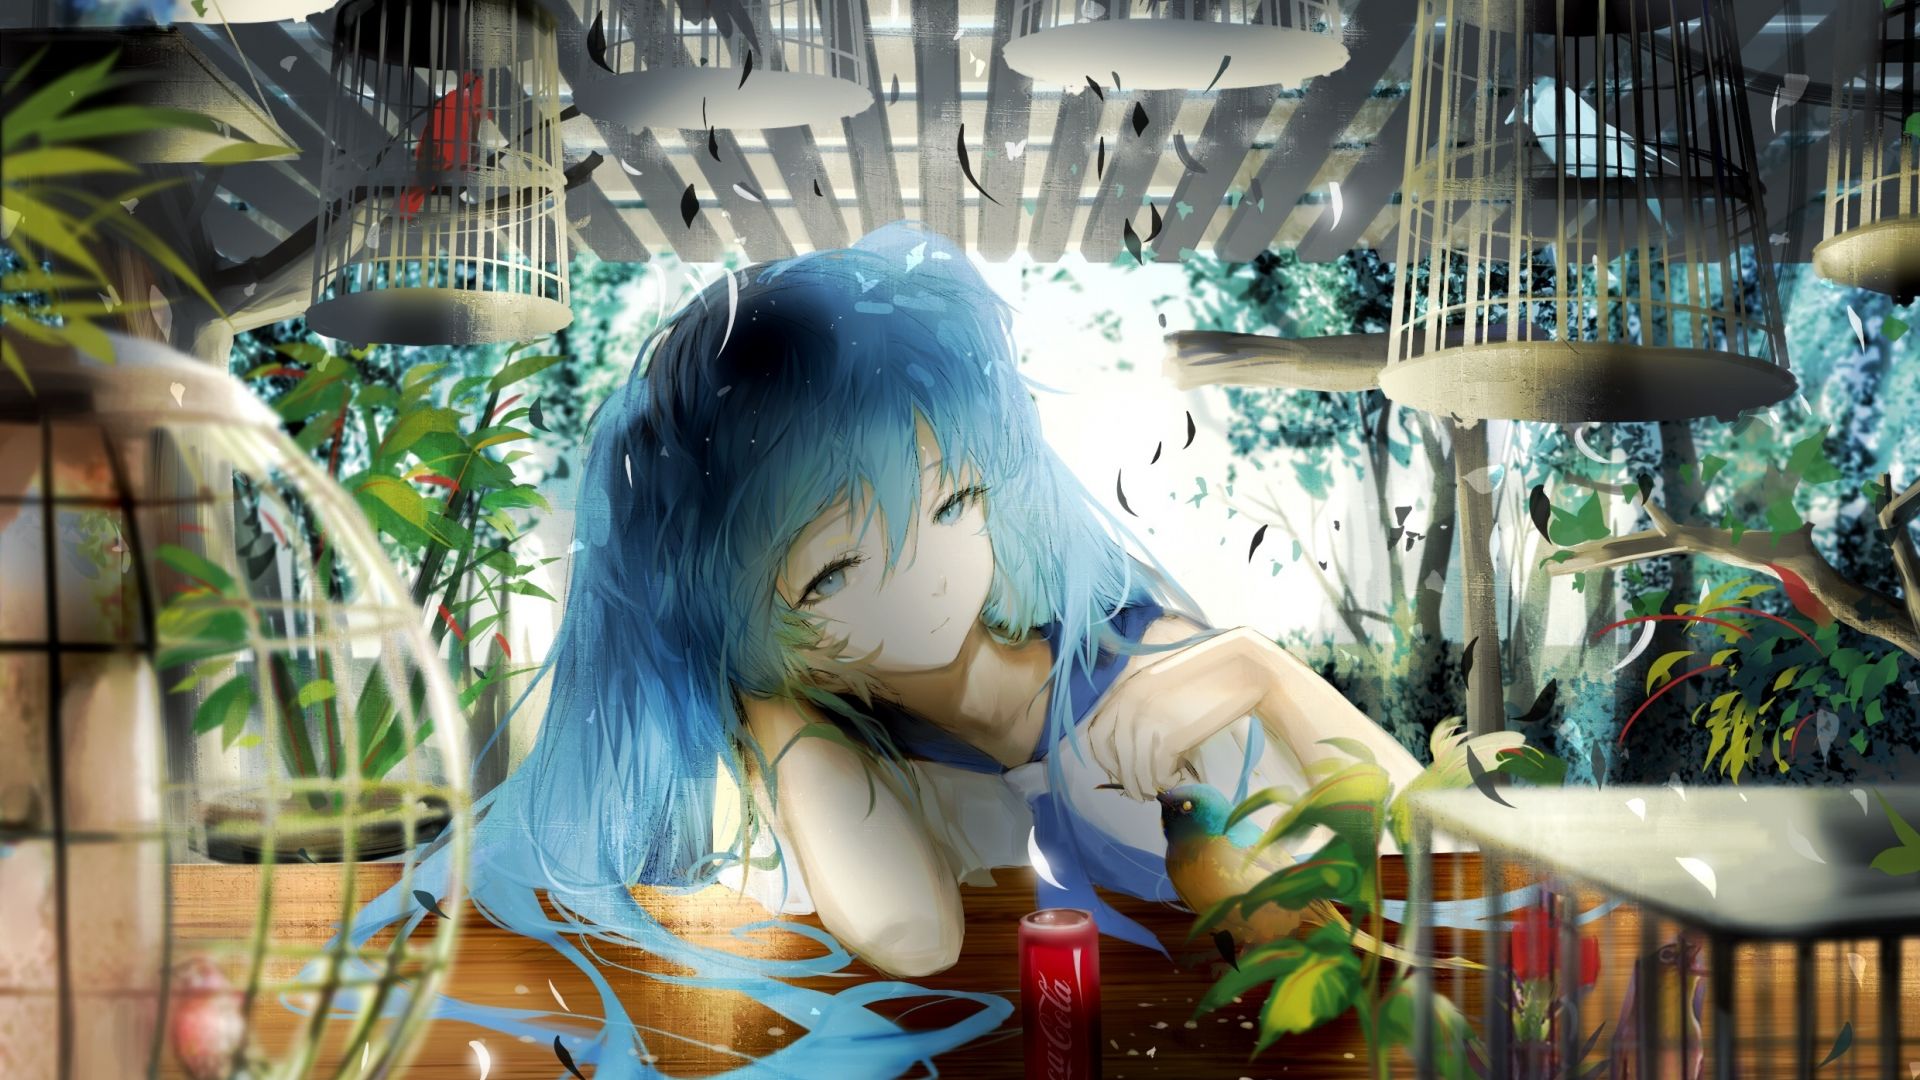 Wallpaper Hangover, anime girl, hatsune miku, birds cage